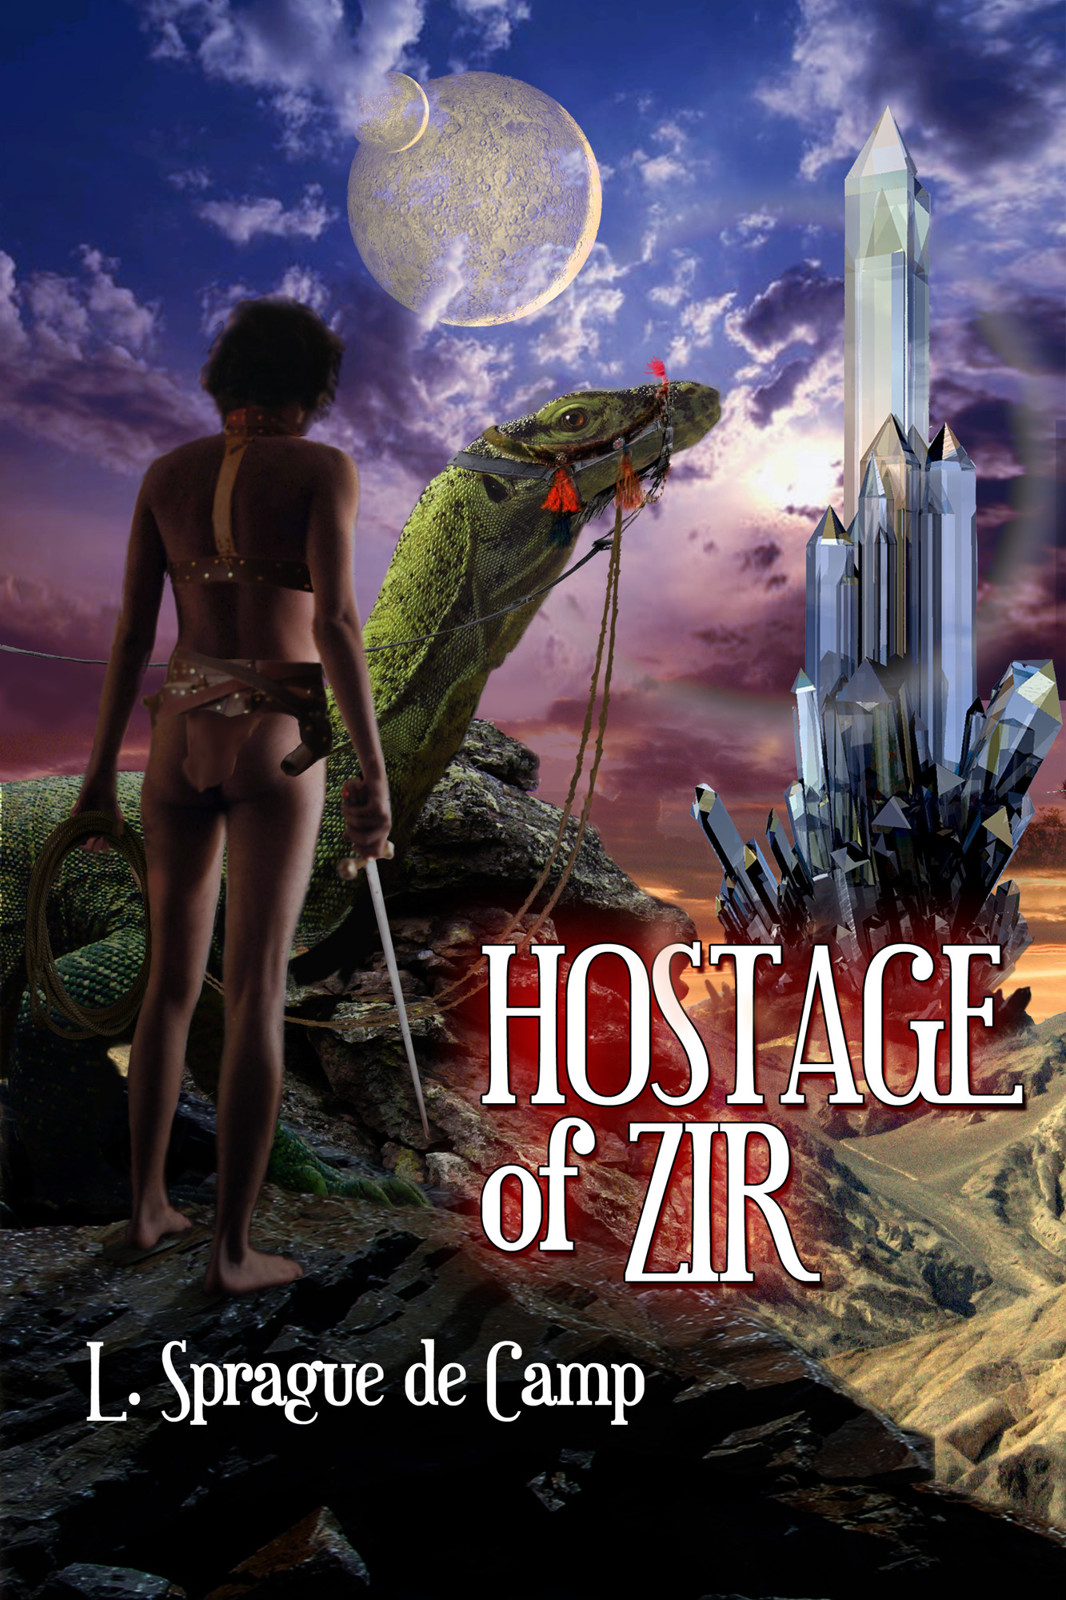 The Hostage of Zir by L. Sprague de Camp